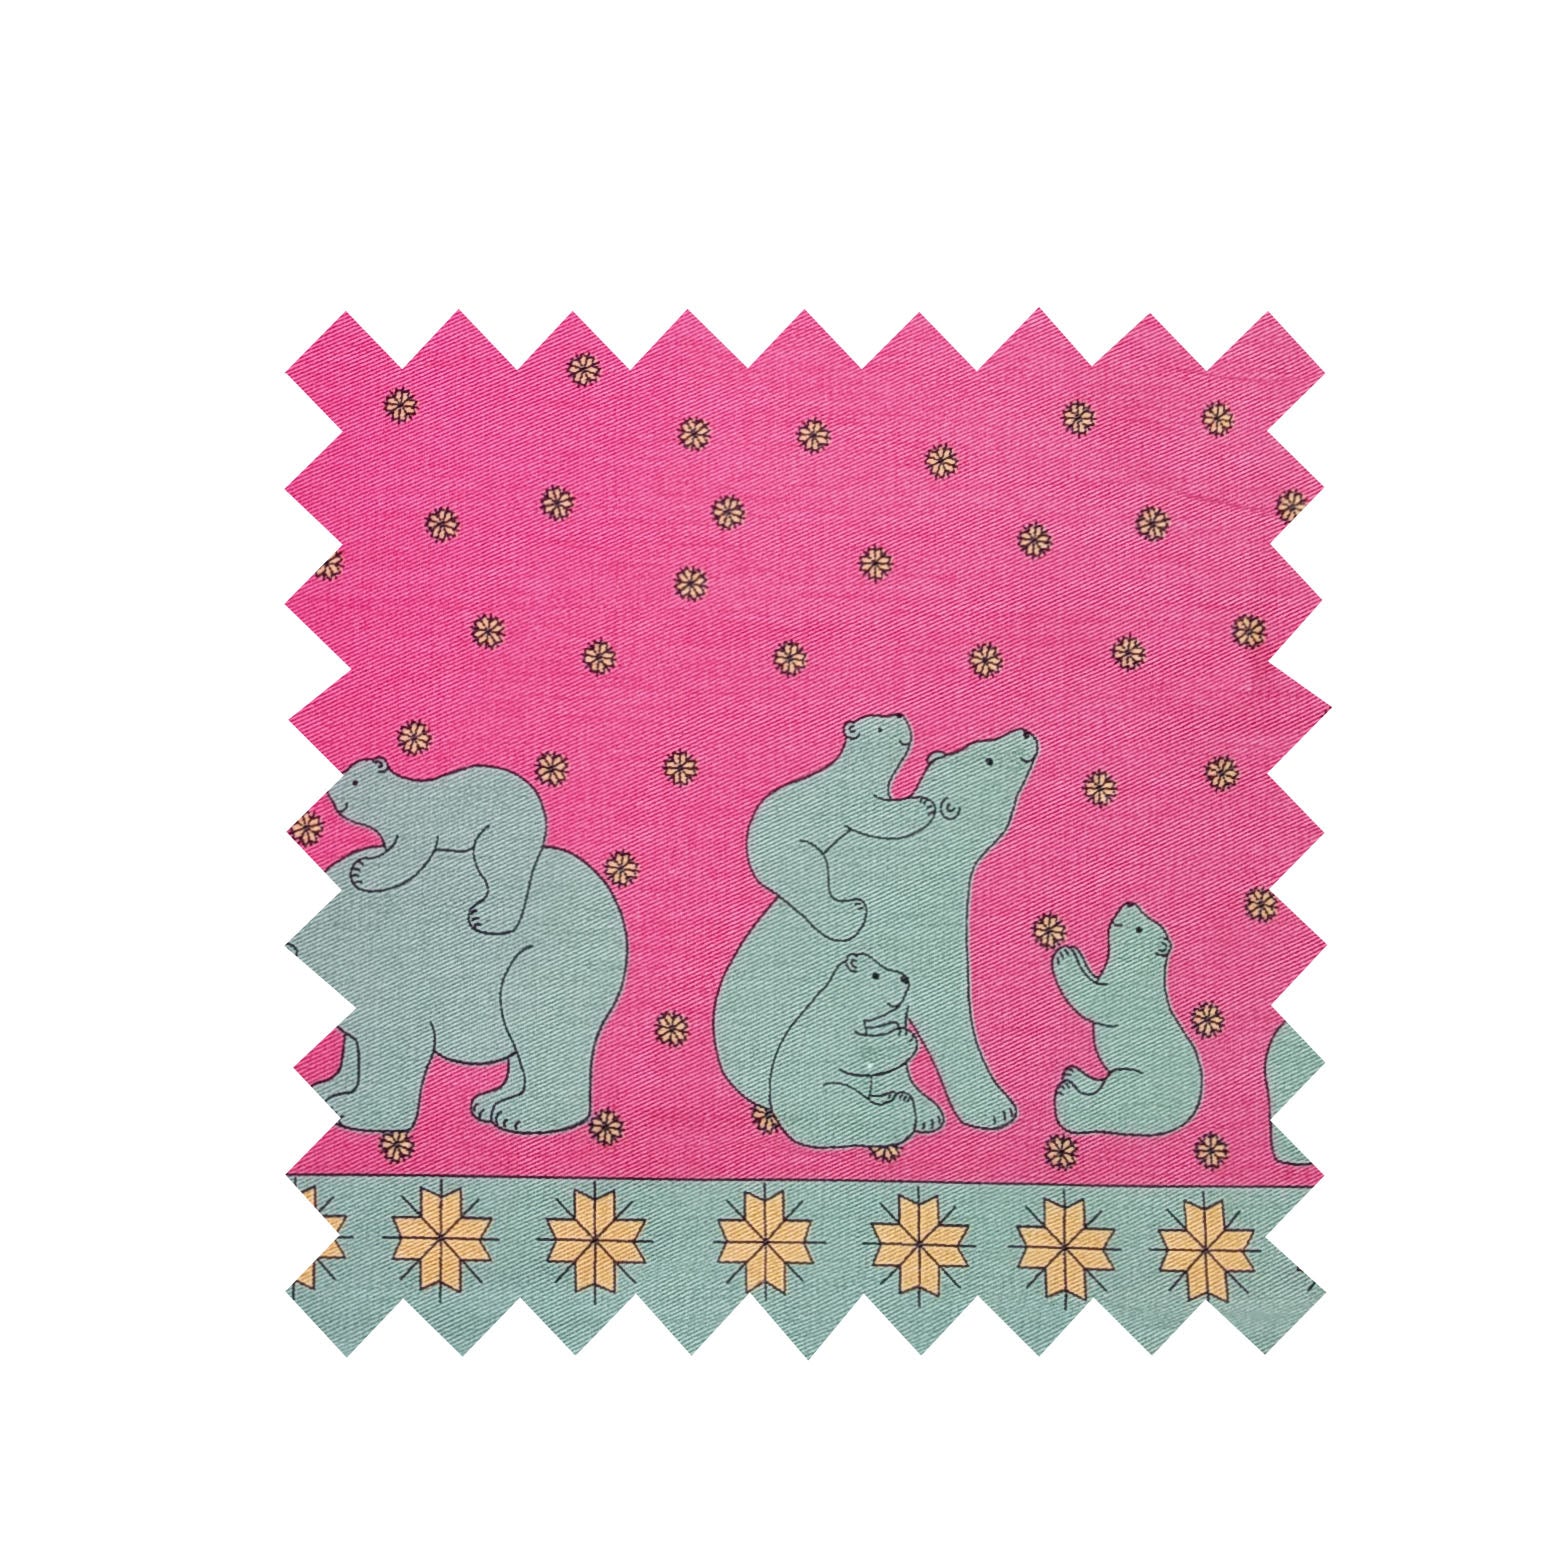 Remnant - 2m - Pink/Green Polar Bear Fabric - Cotton twill